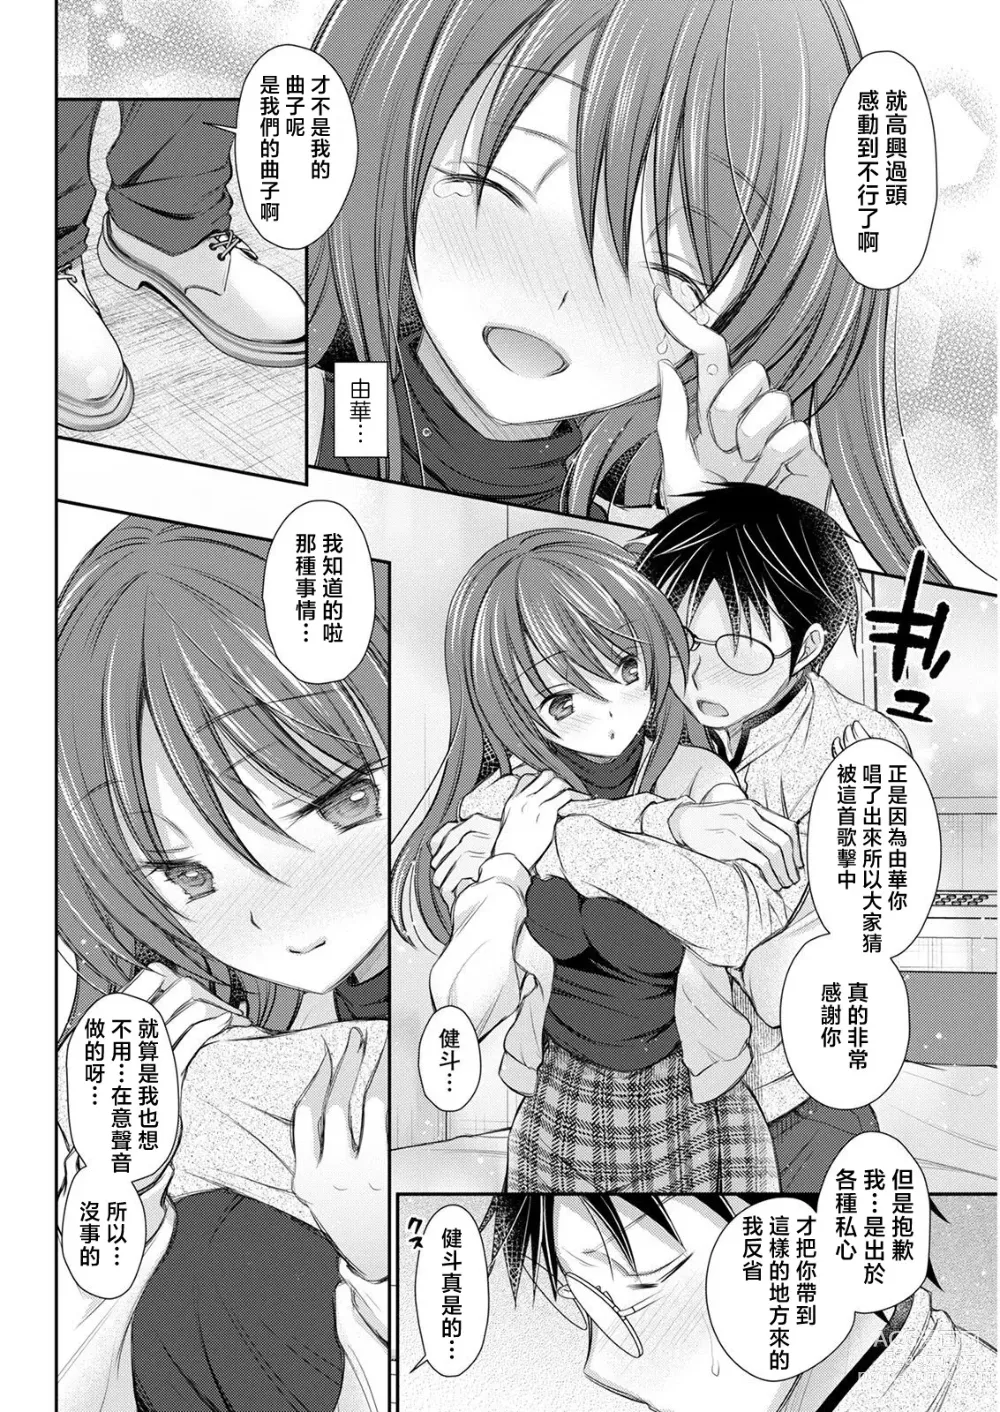 Page 8 of manga Koe o Kikasete